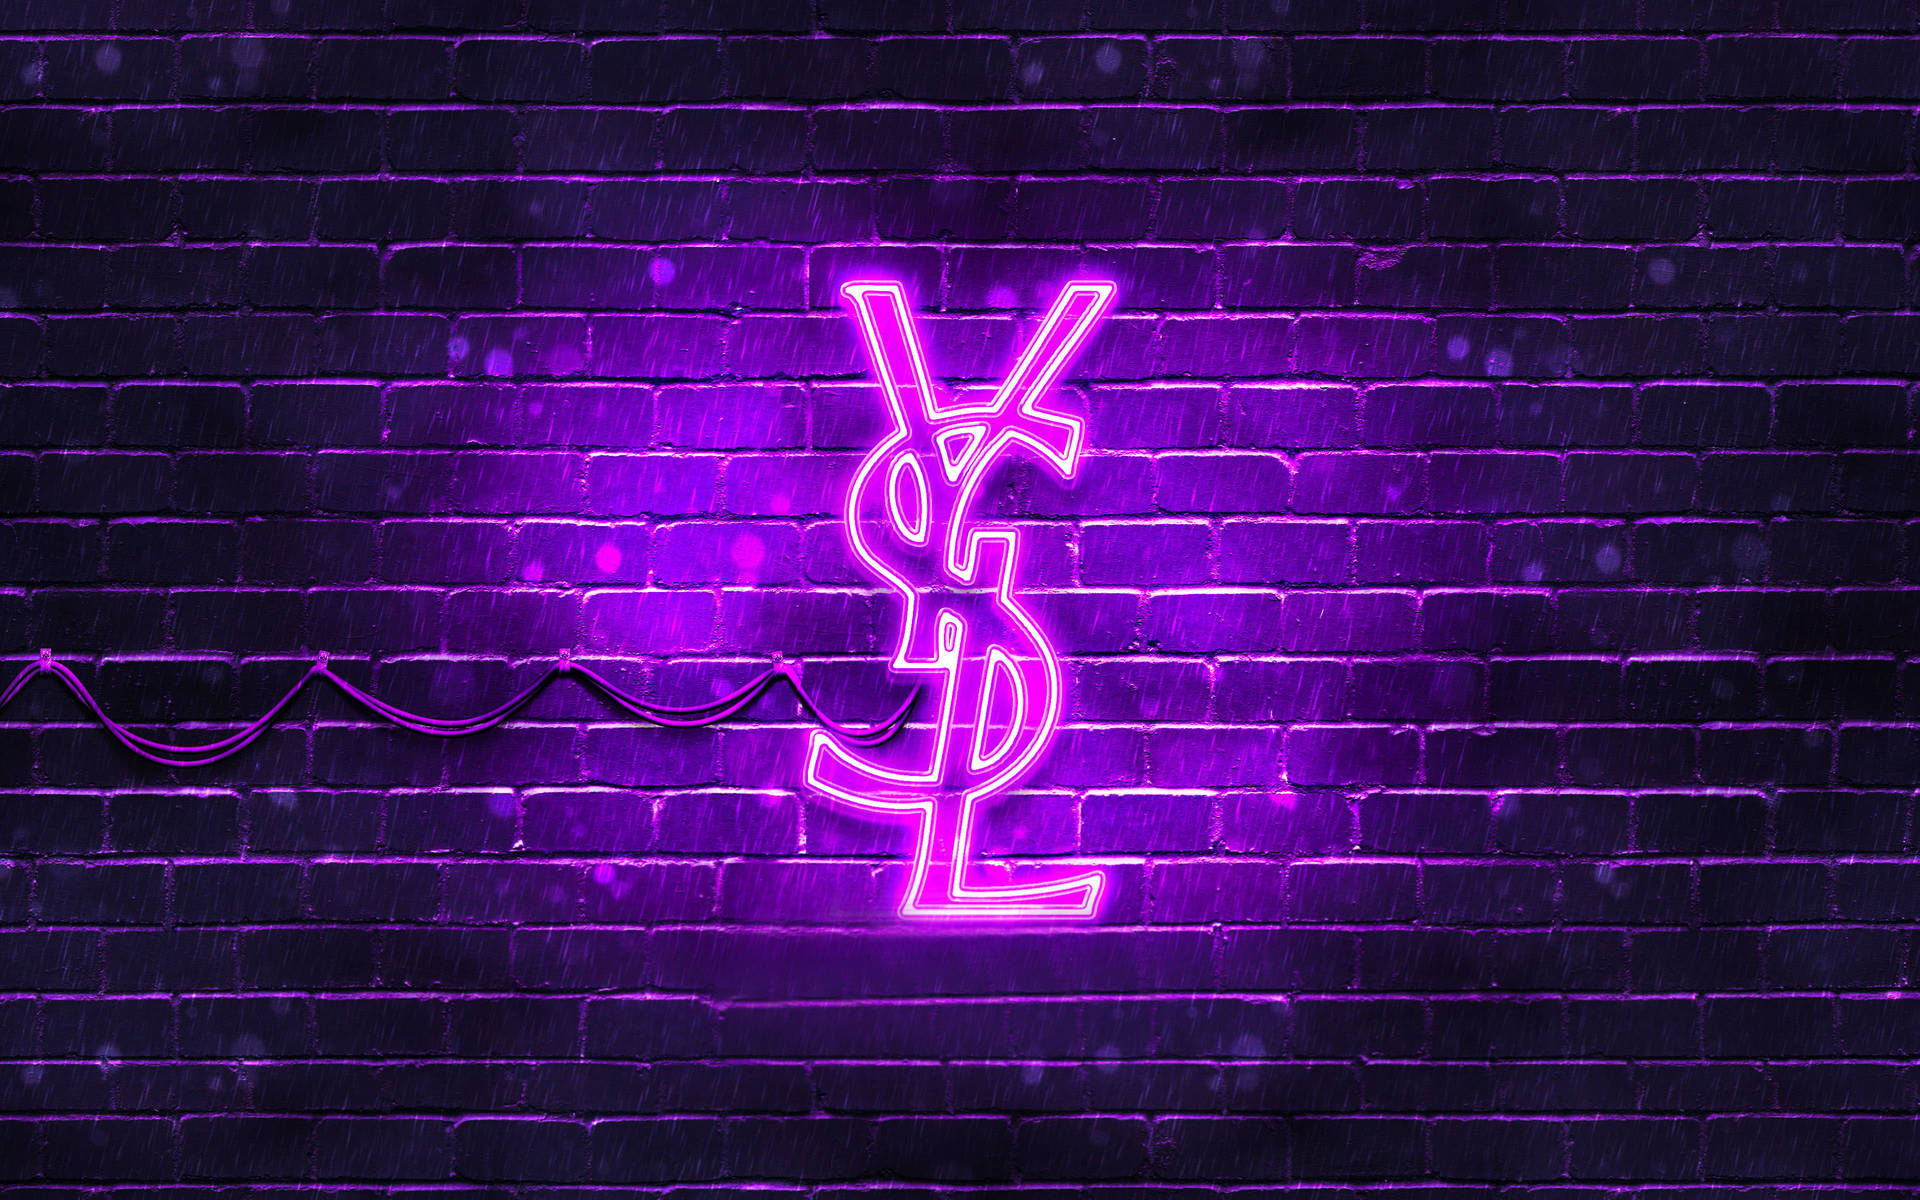 Violet Ysl Neon Lighting Background